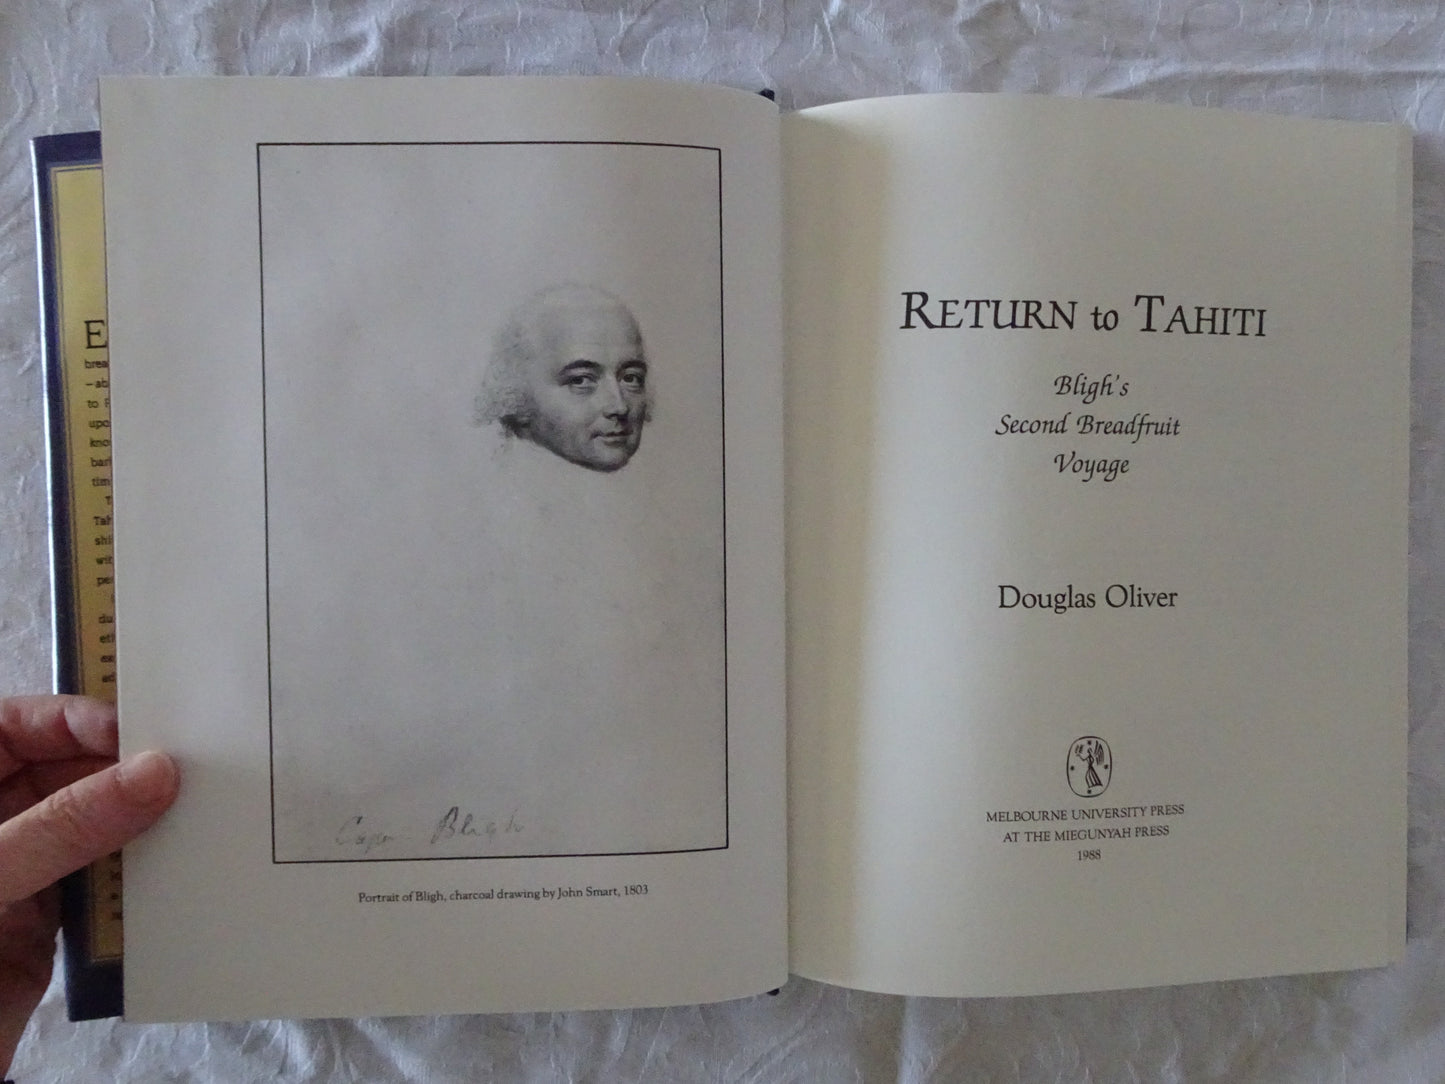 Return to Tahiti by Douglas Oliver